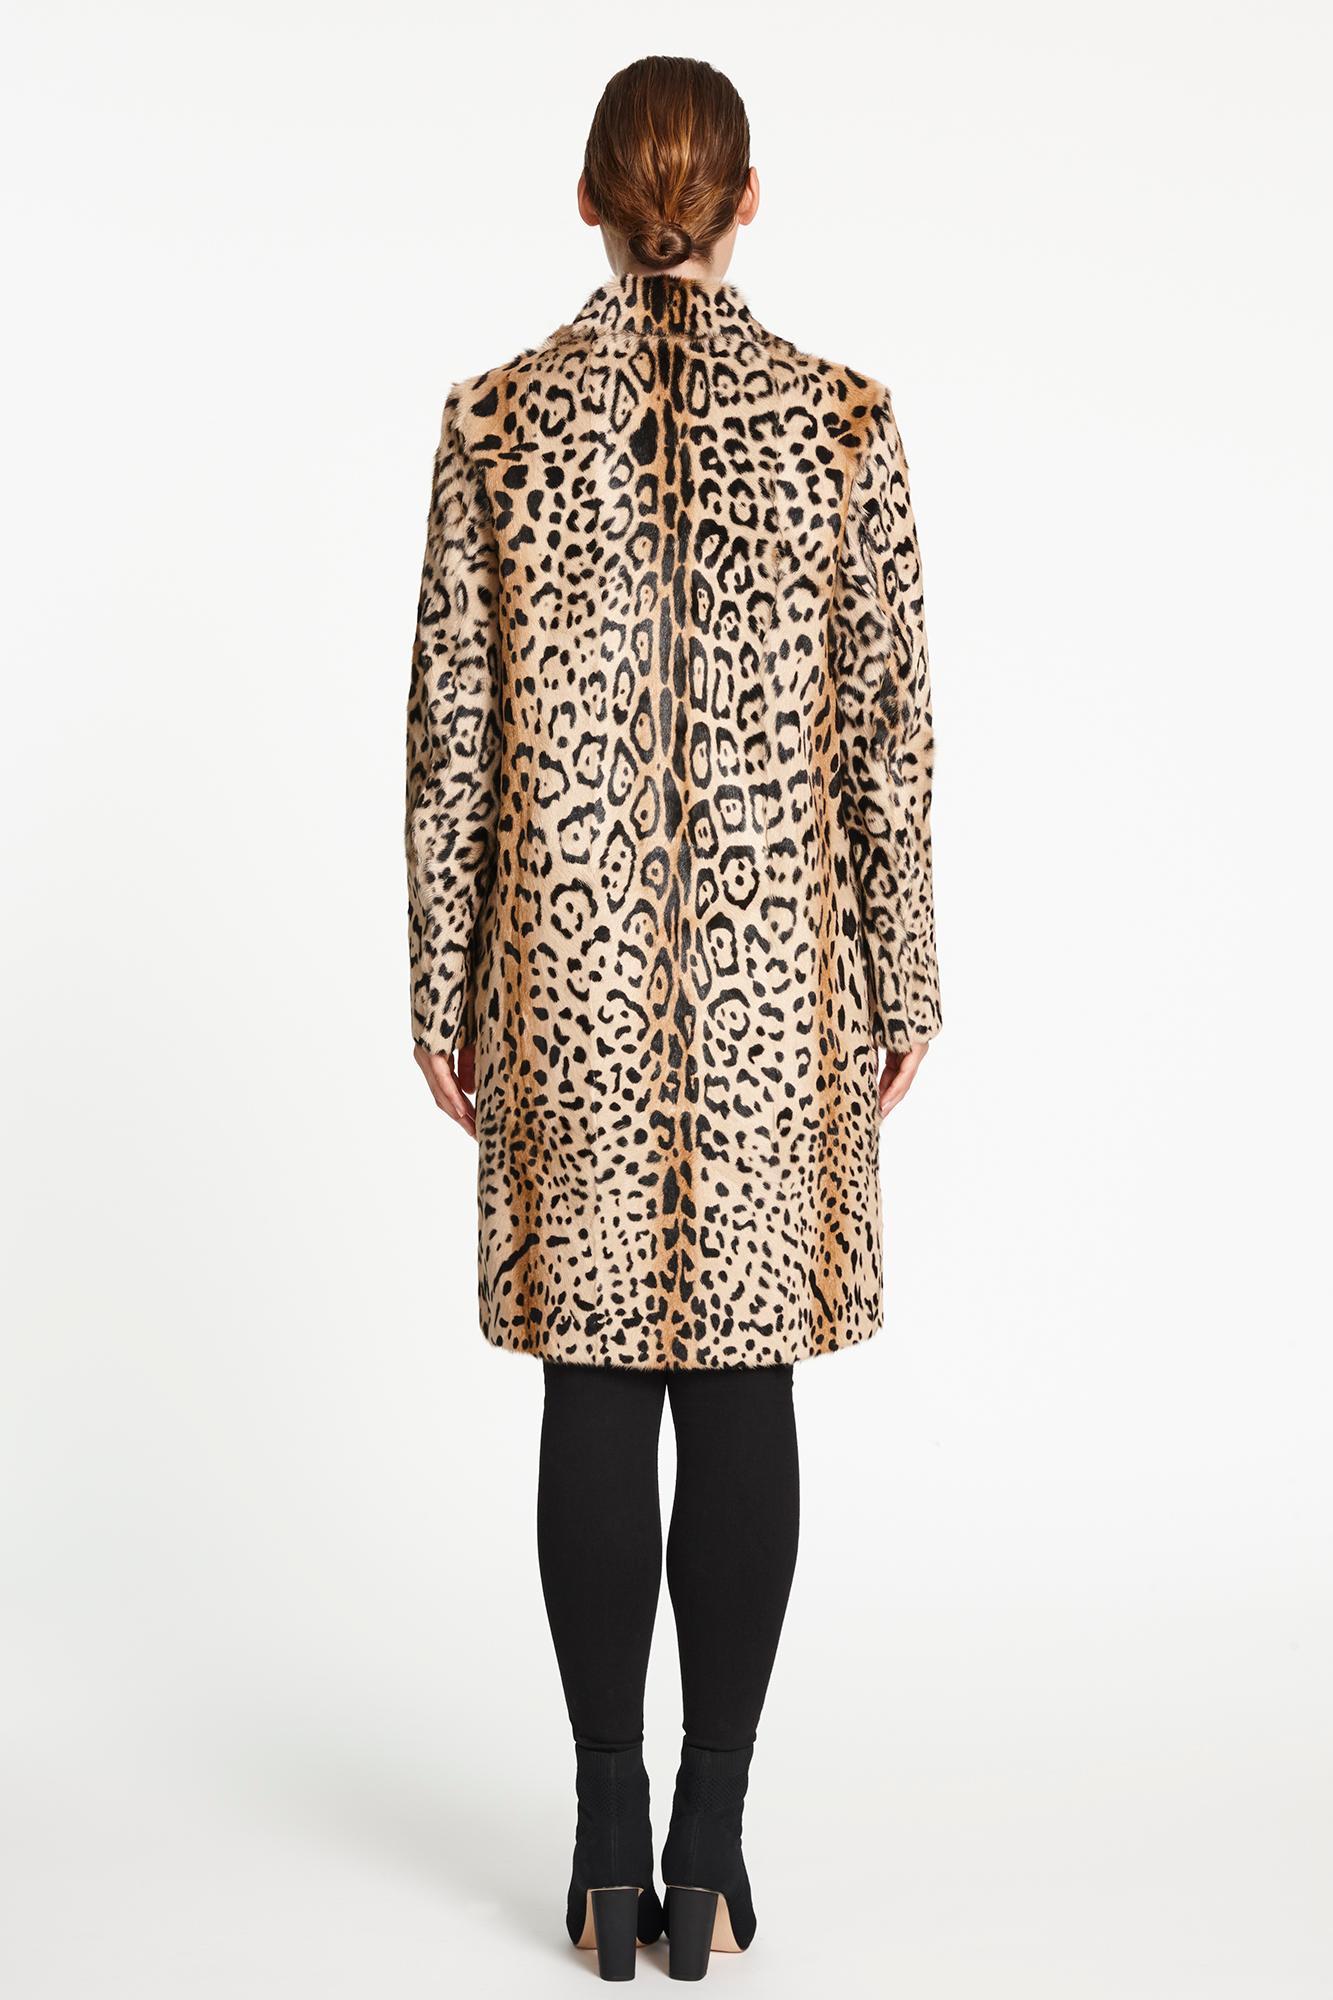 Verheyen London Leopard Print Coat in Natural Goat Hair Fur Size 8-10 4